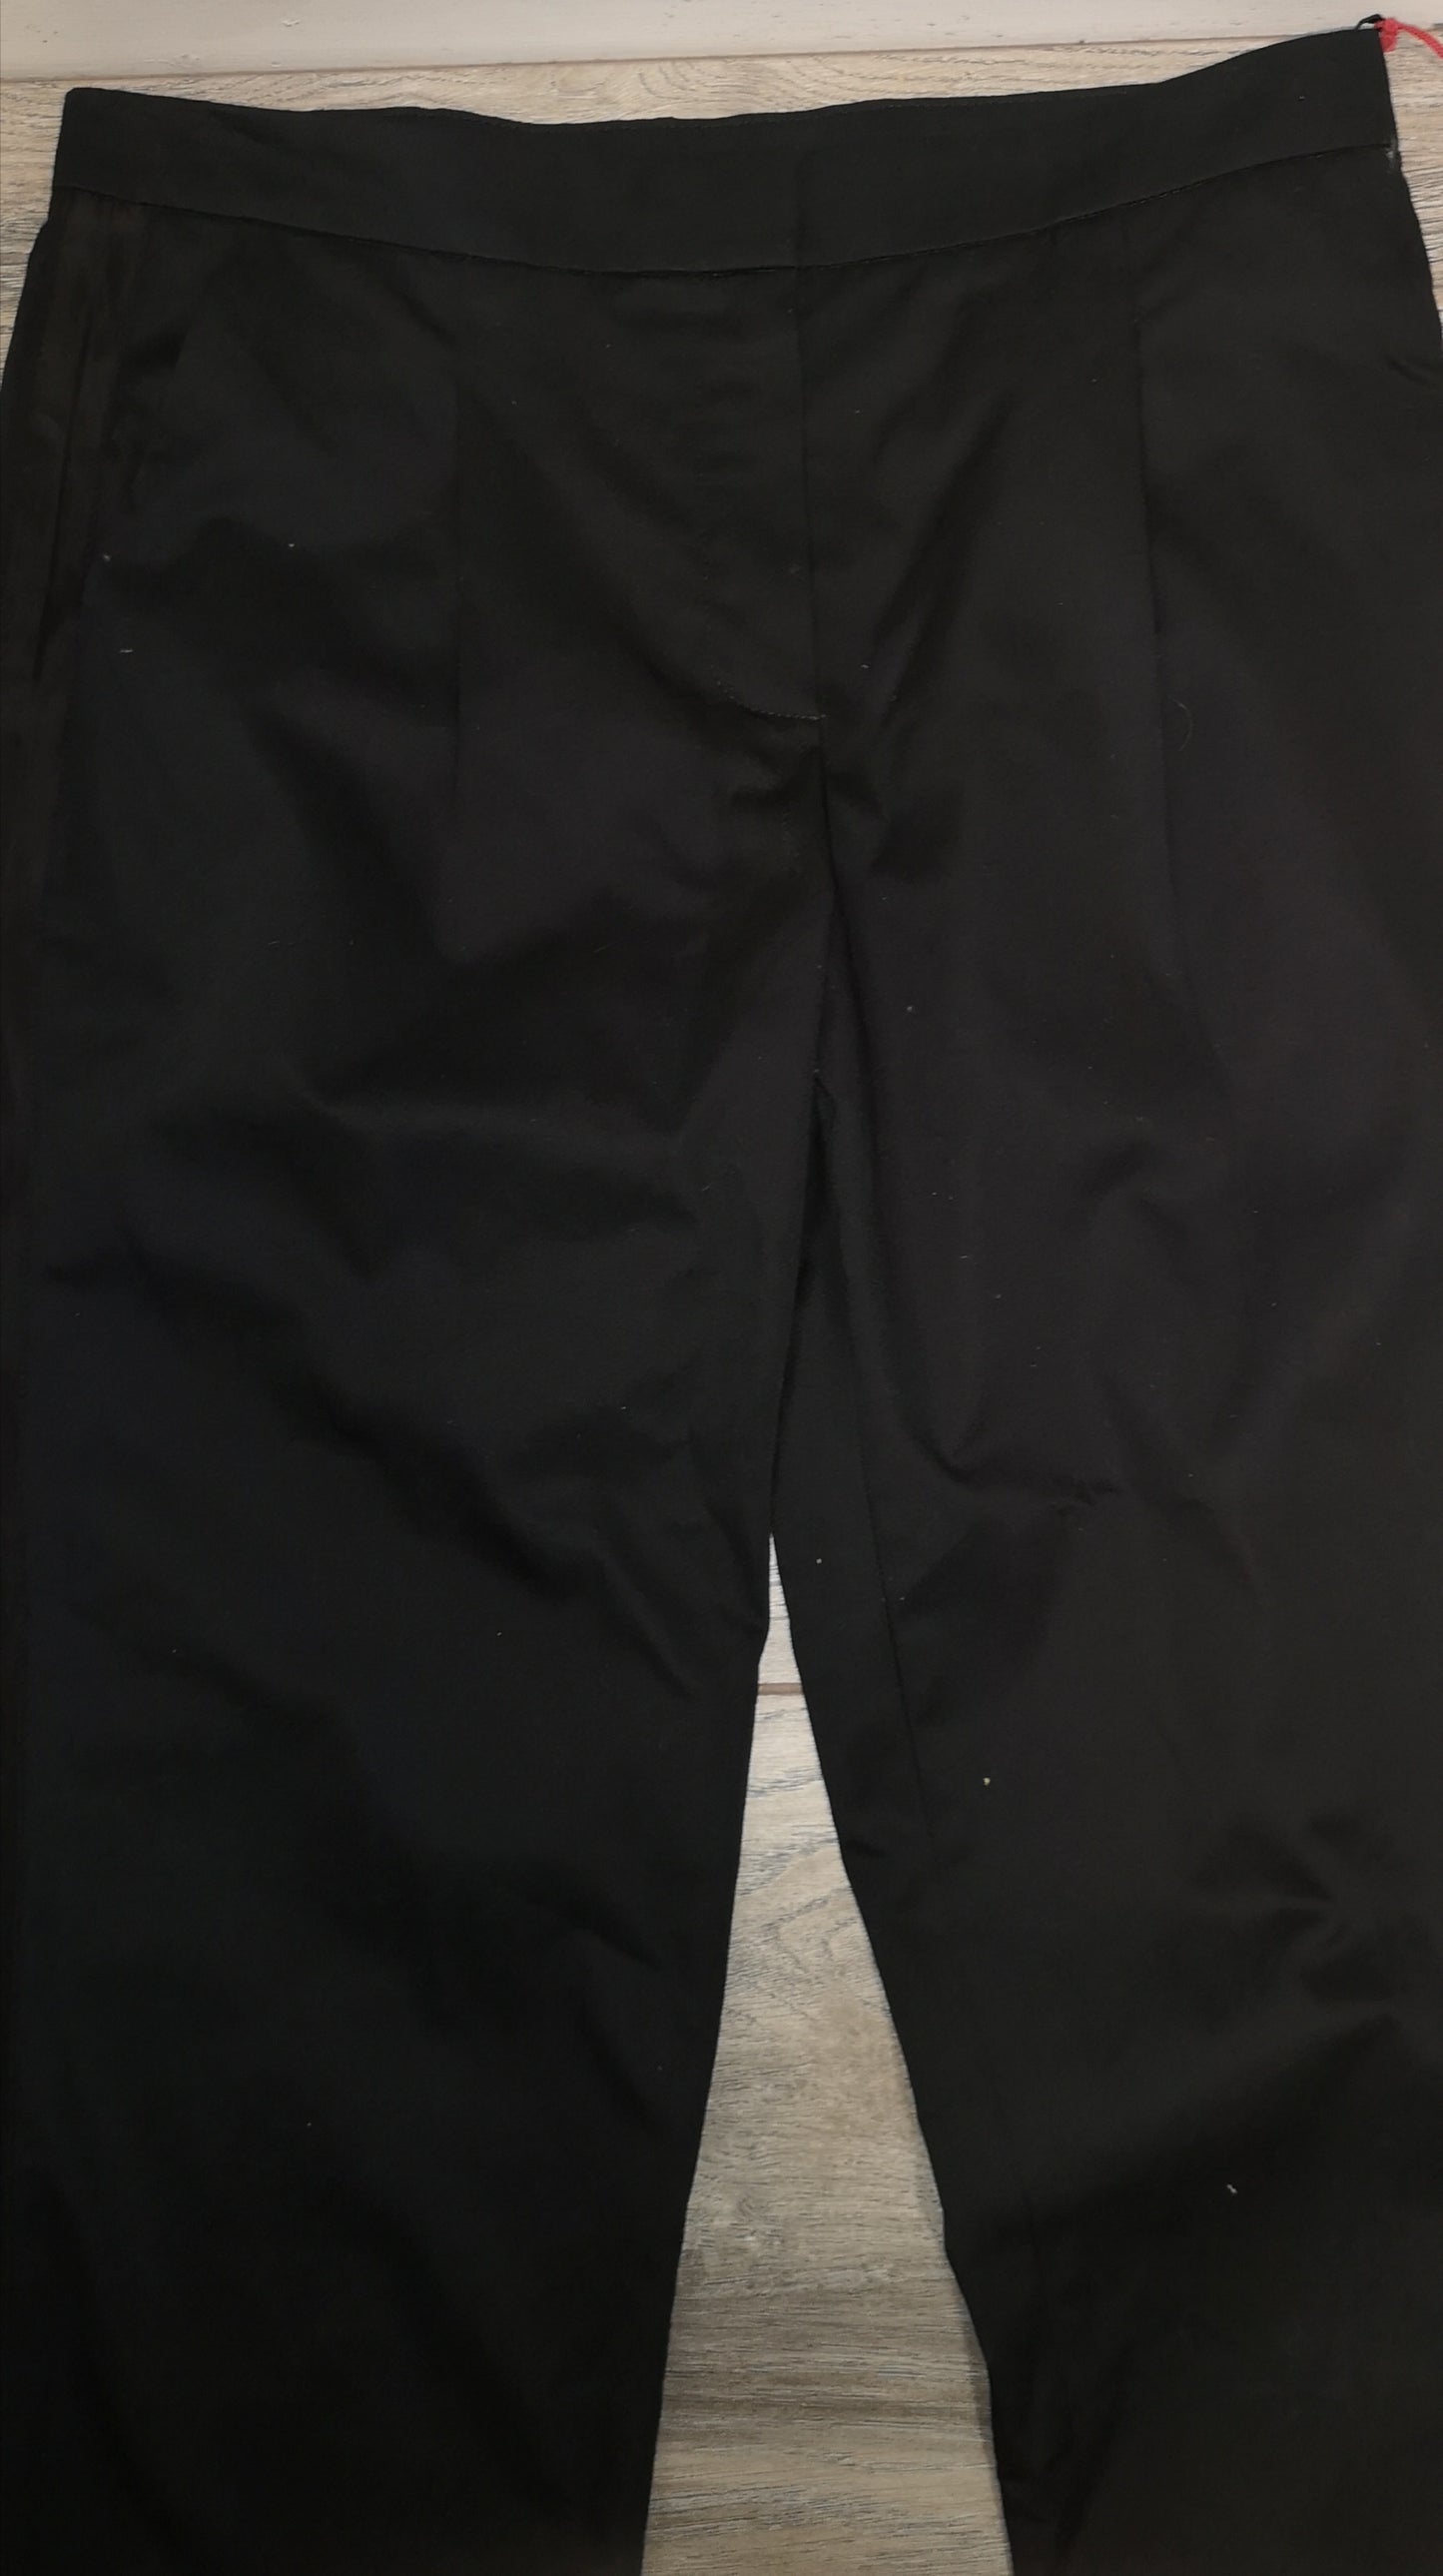 BNWT Jaeger Black Trousers Size 10